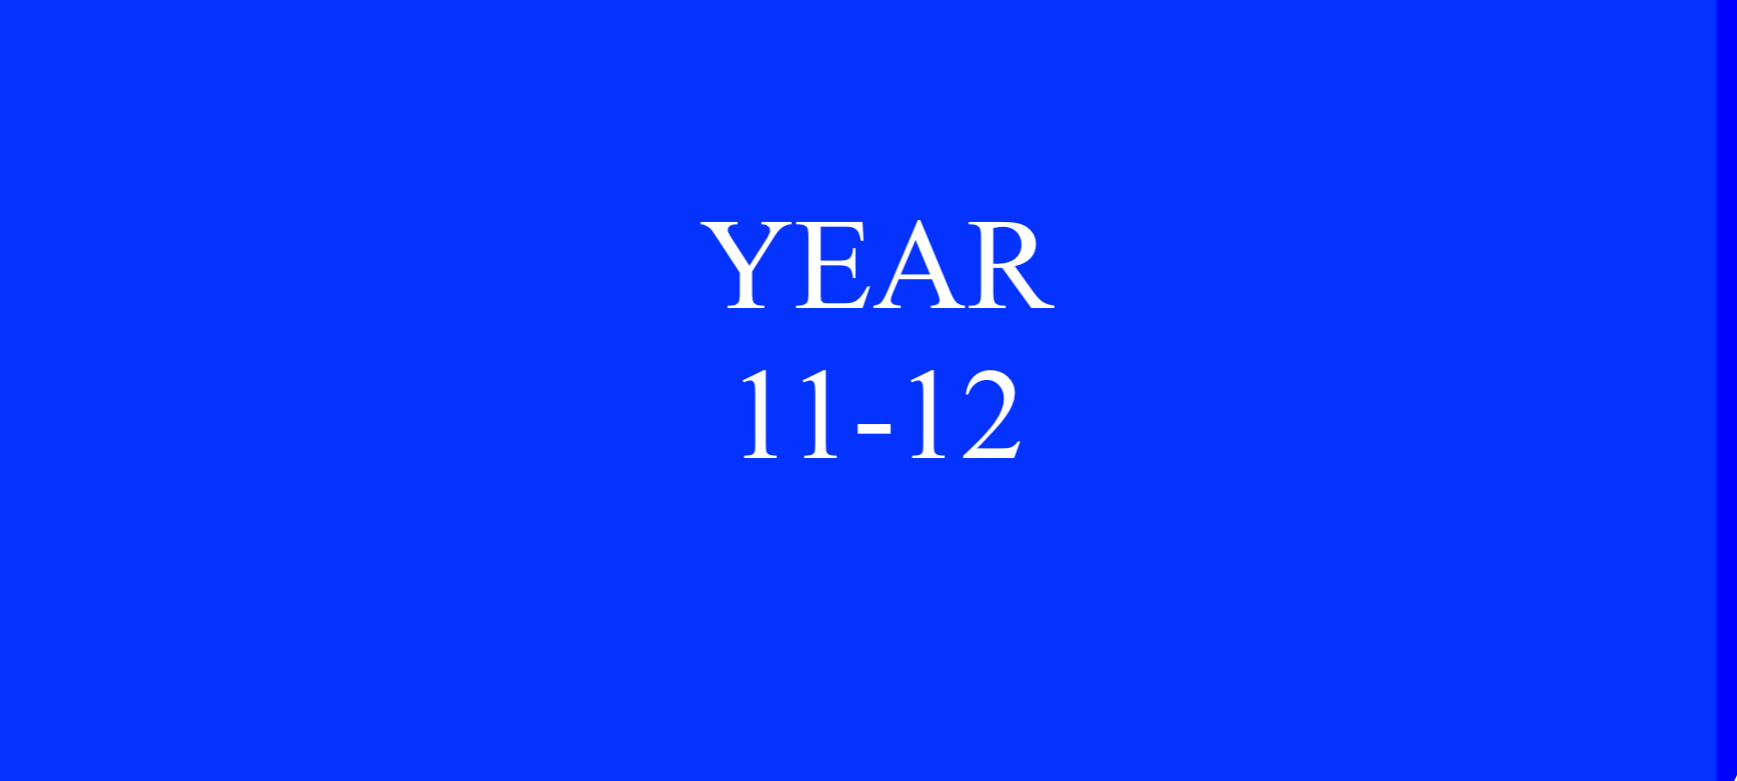 Year 11-12 2021